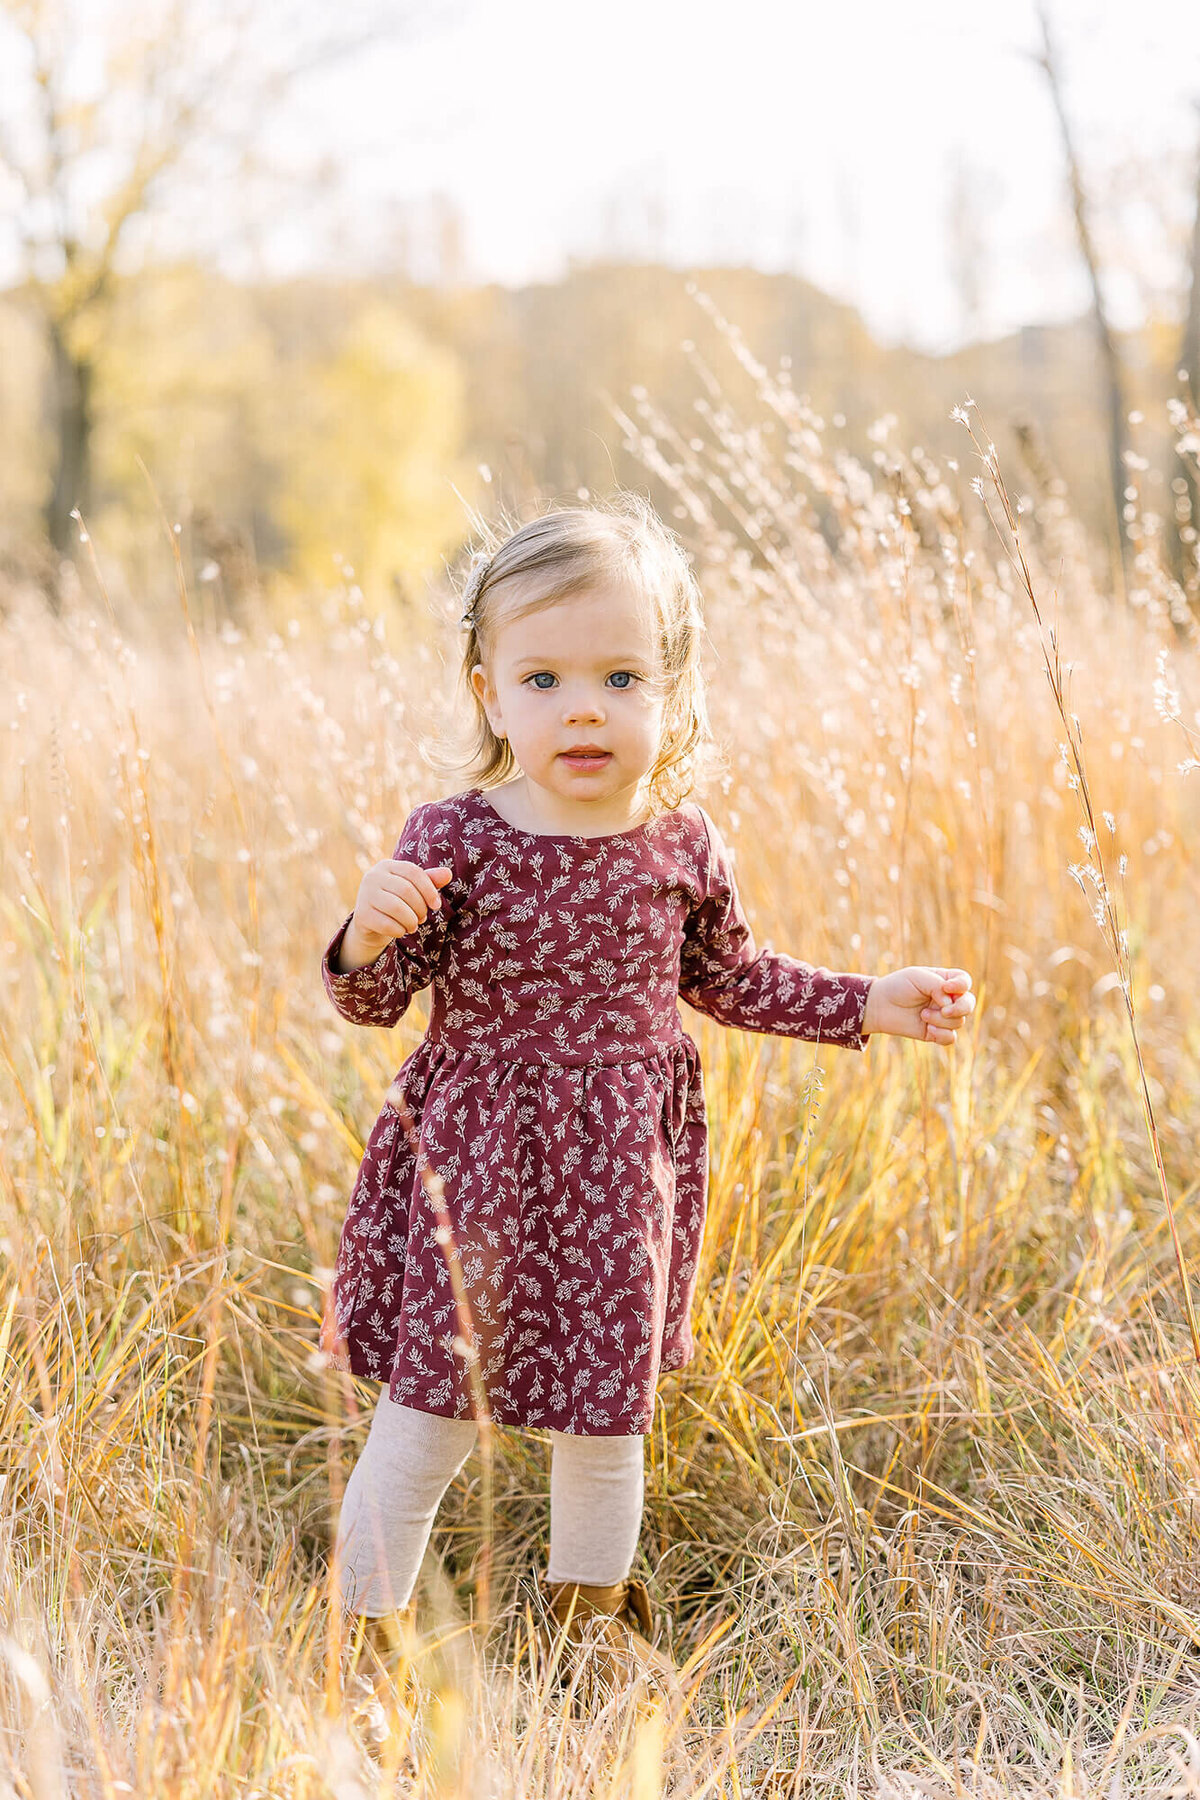 Baby girl walking through tall grass.